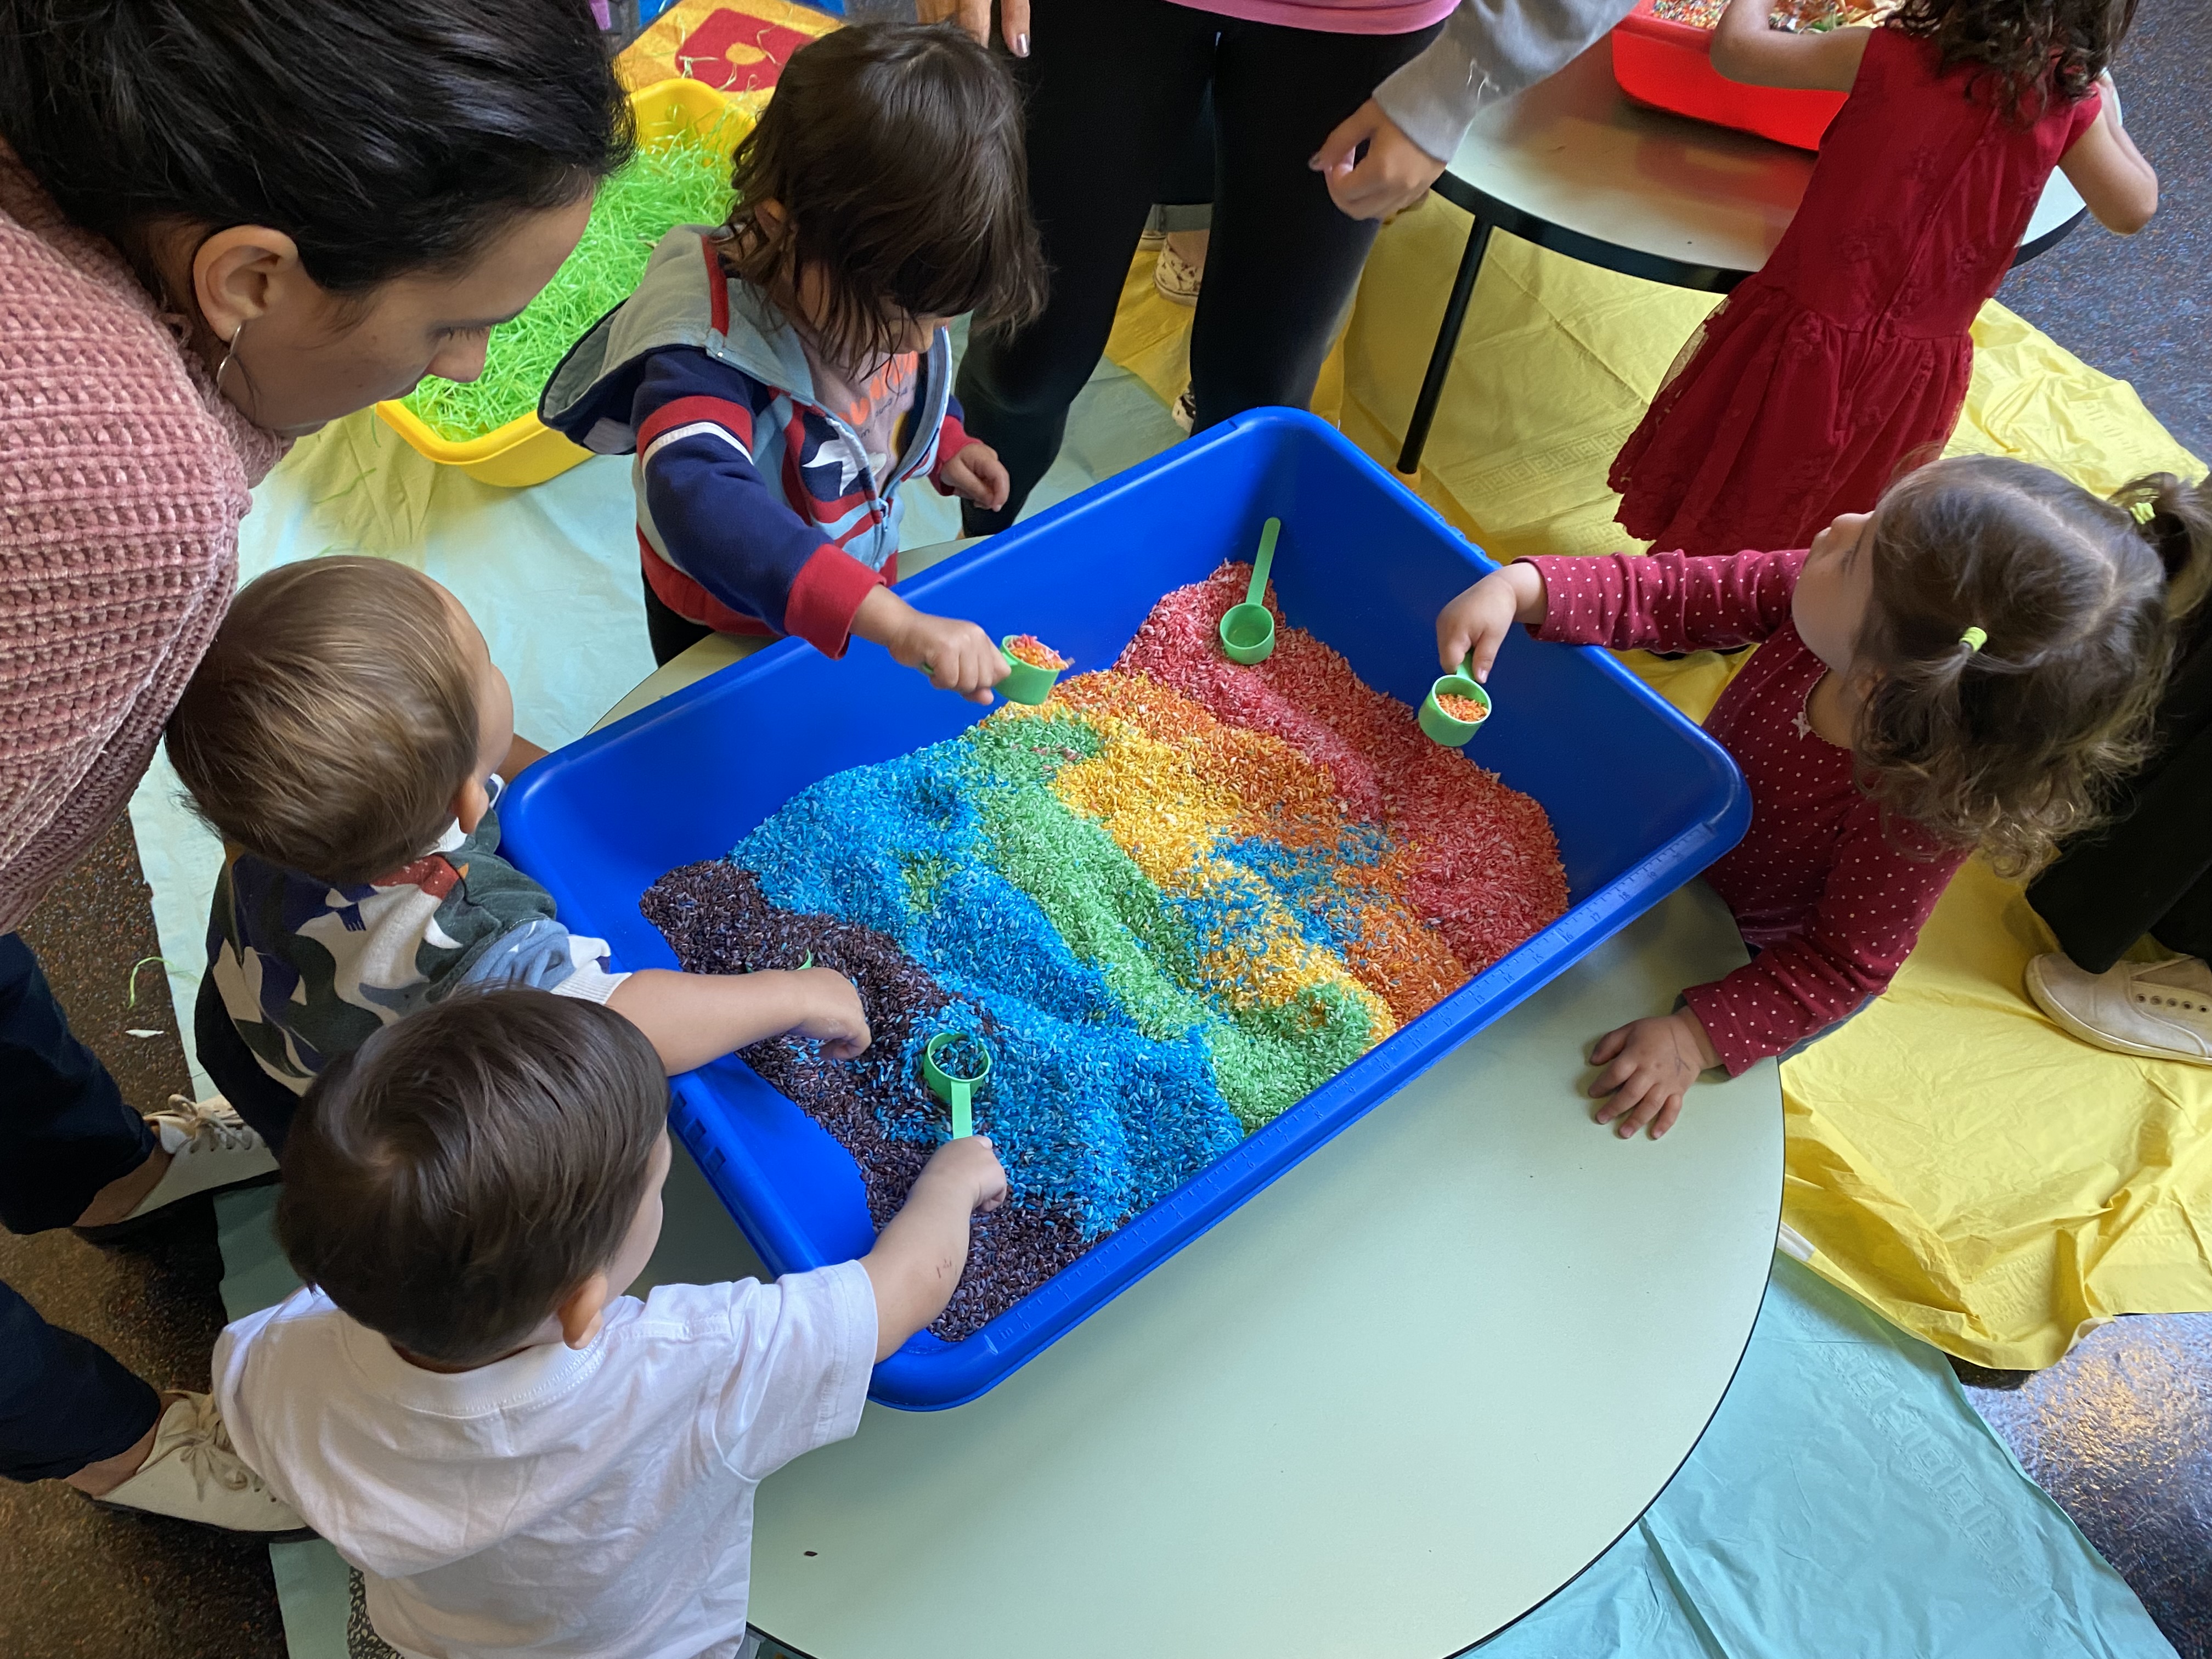 Kids playing with rainbow rice in bin